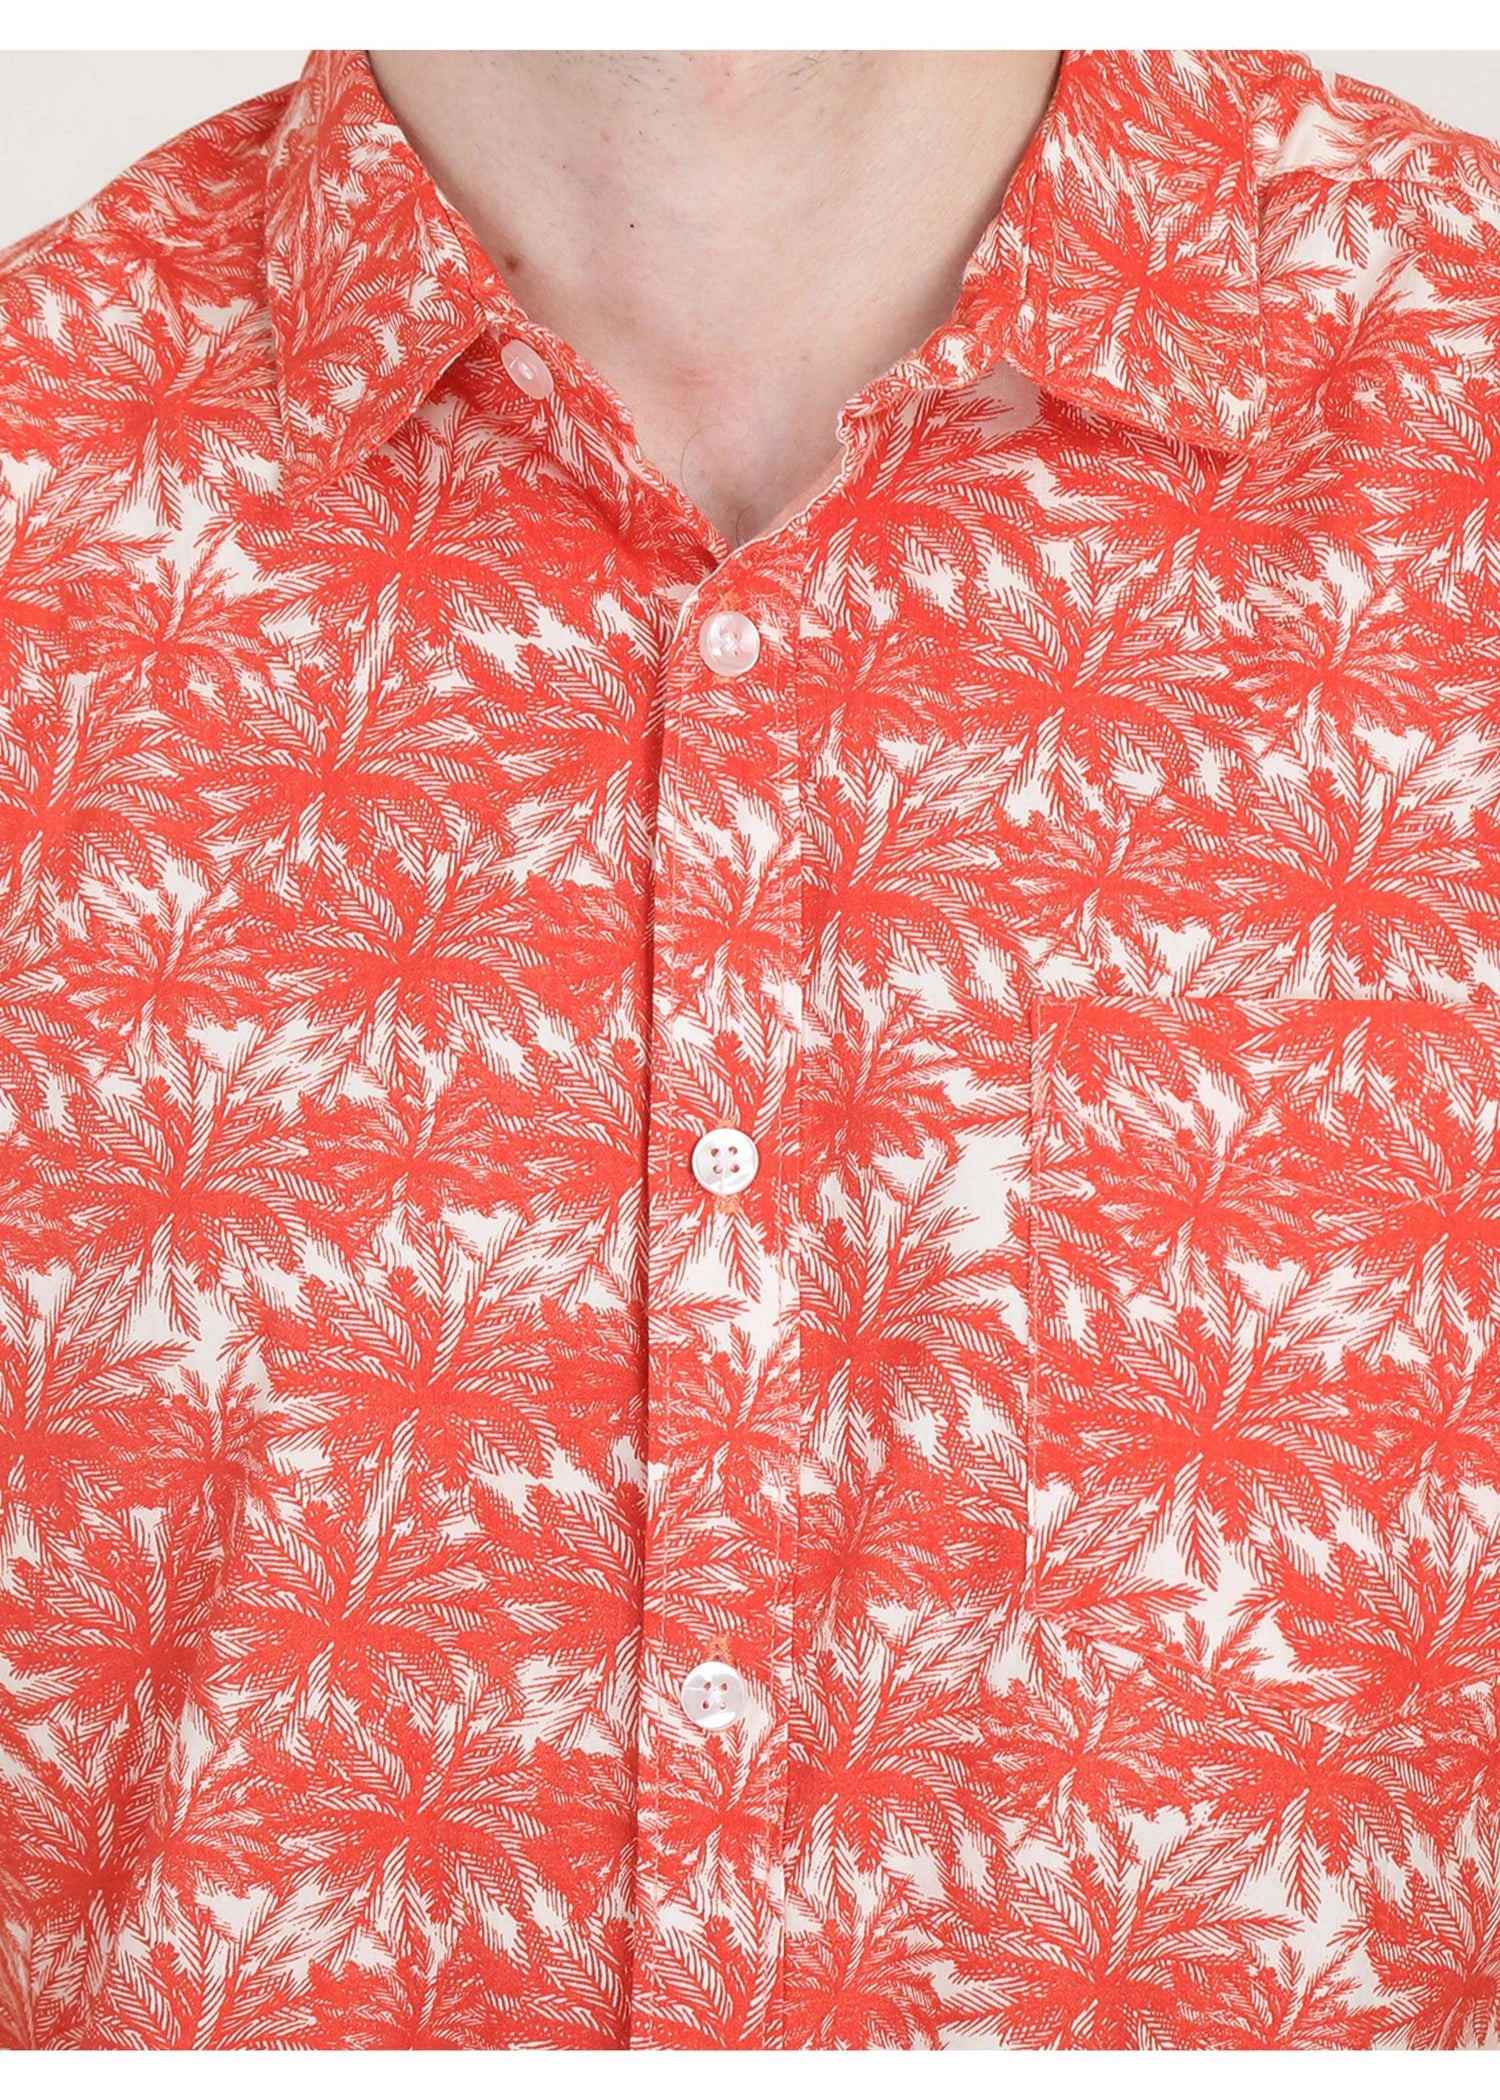 Tusok-orange-palmVacation-Printed Shirtimage-Orange Palm (2)